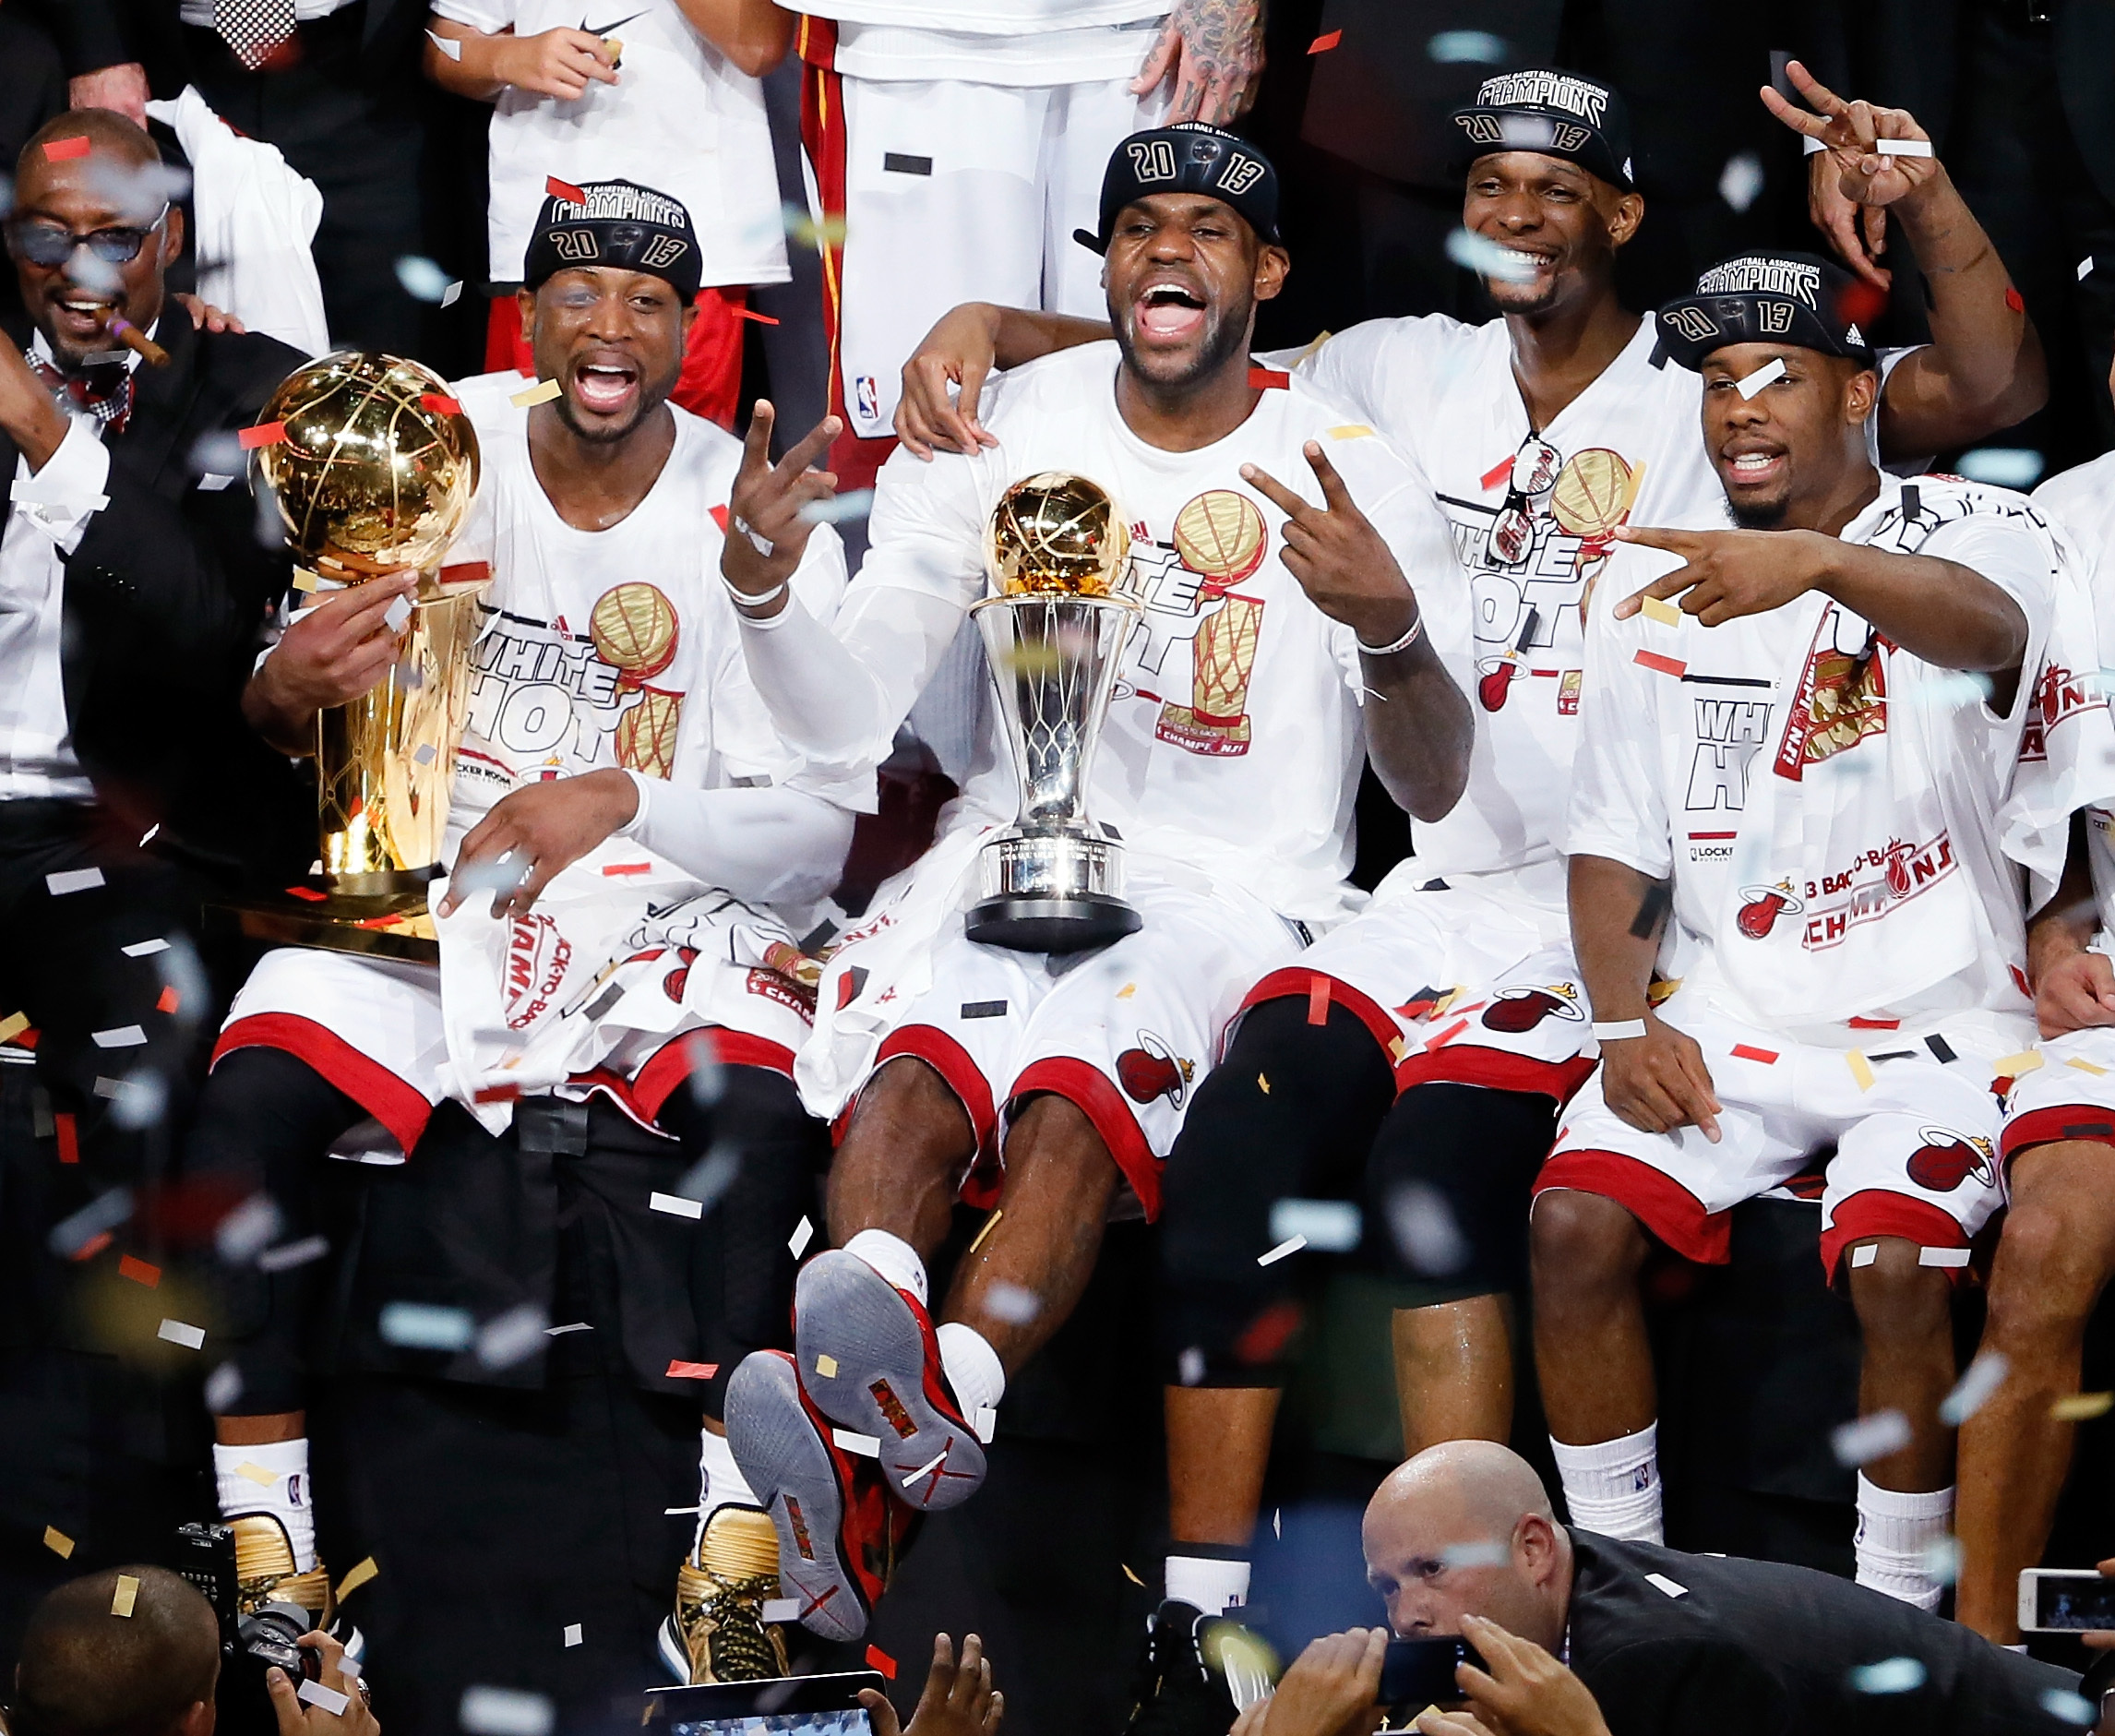 Heat beat Spurs 95-88 to win 2nd consecutive NBA championship - CBS News2292 x 1881